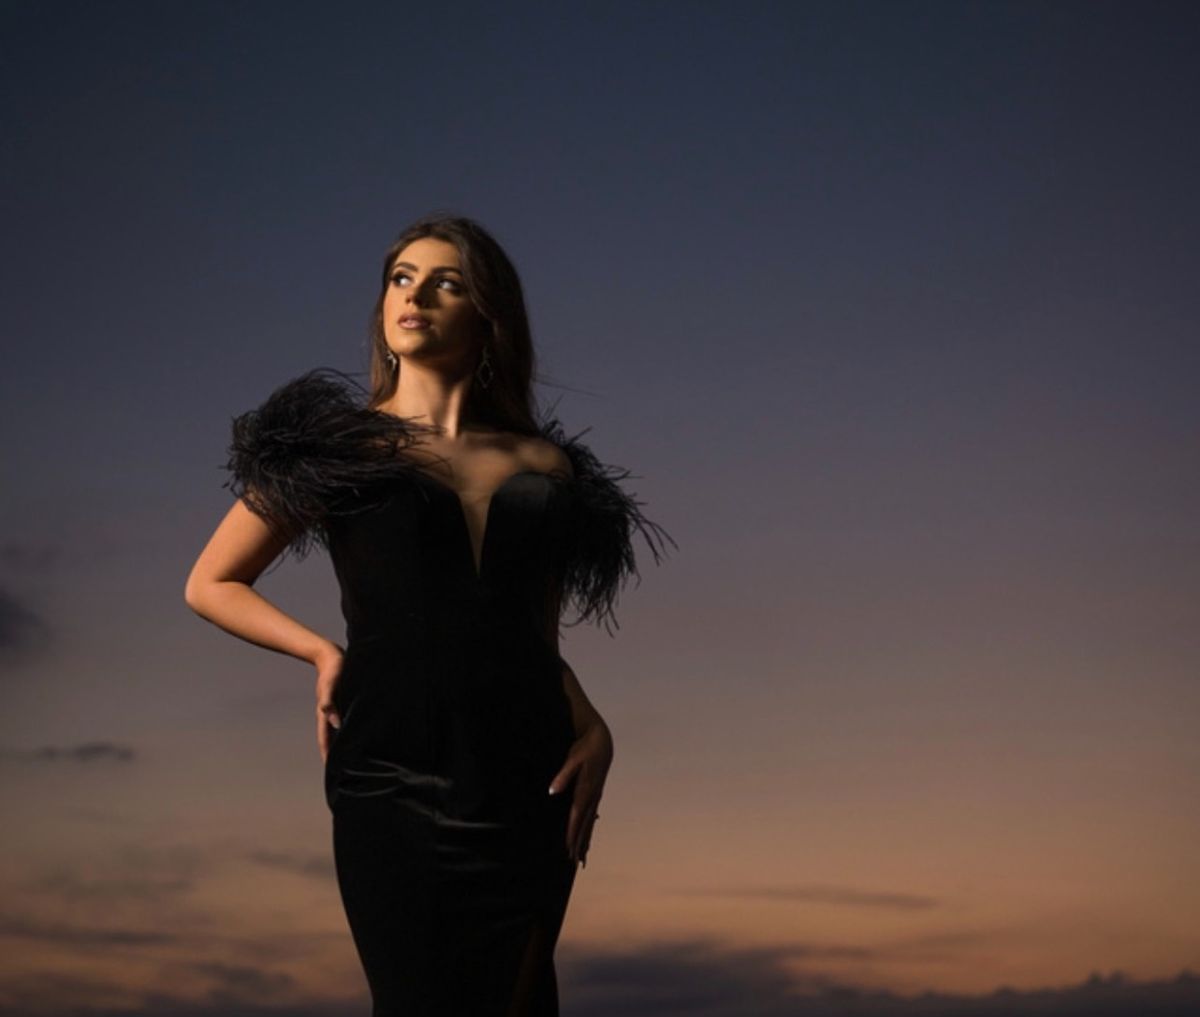 Johnathan Kayne Size 0 Velvet Black Side Slit Dress on Queenly